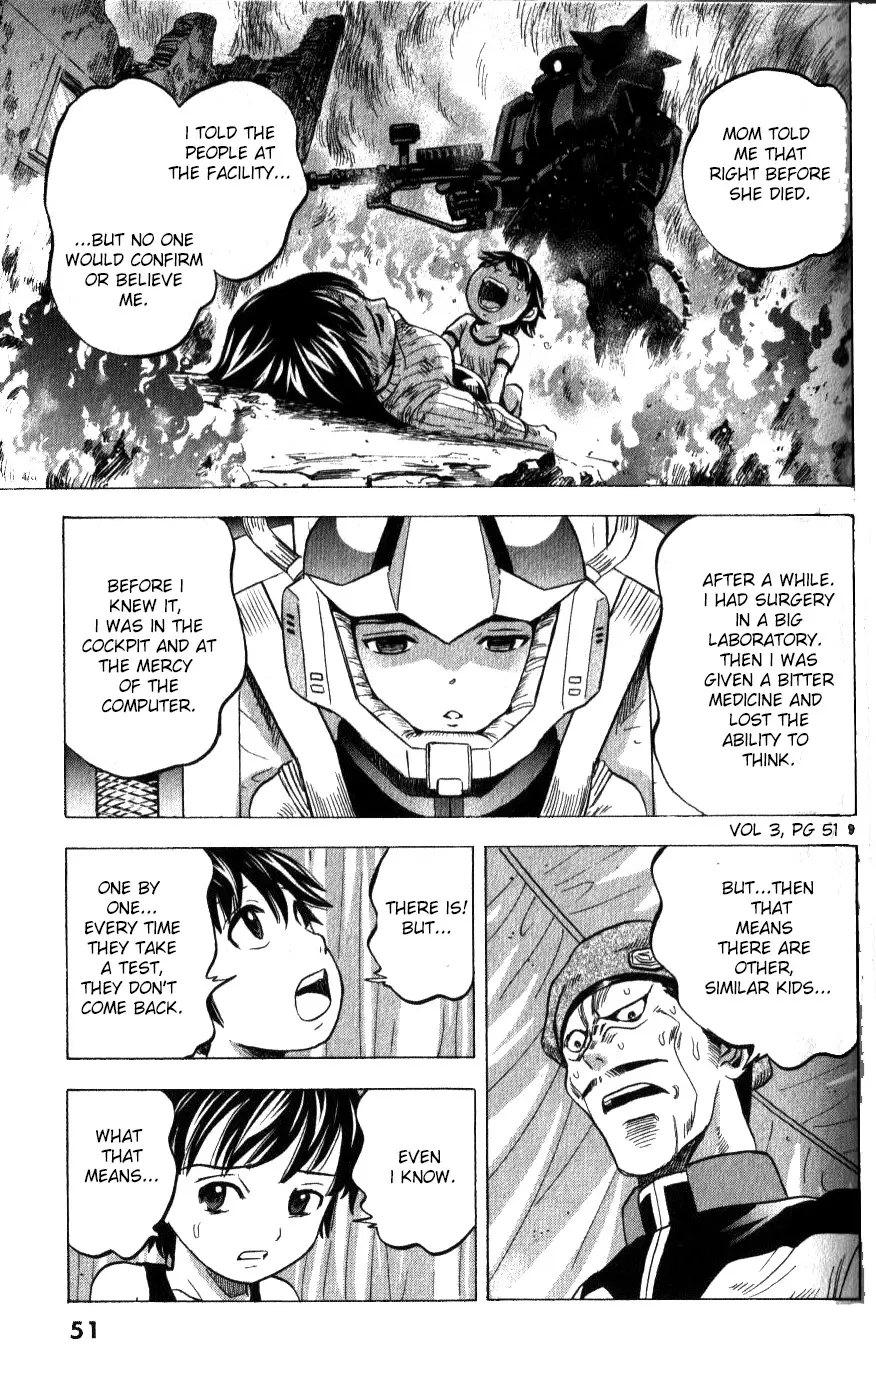 Mobile Suit Gundam Aggressor - 11 page 9-0781ec13